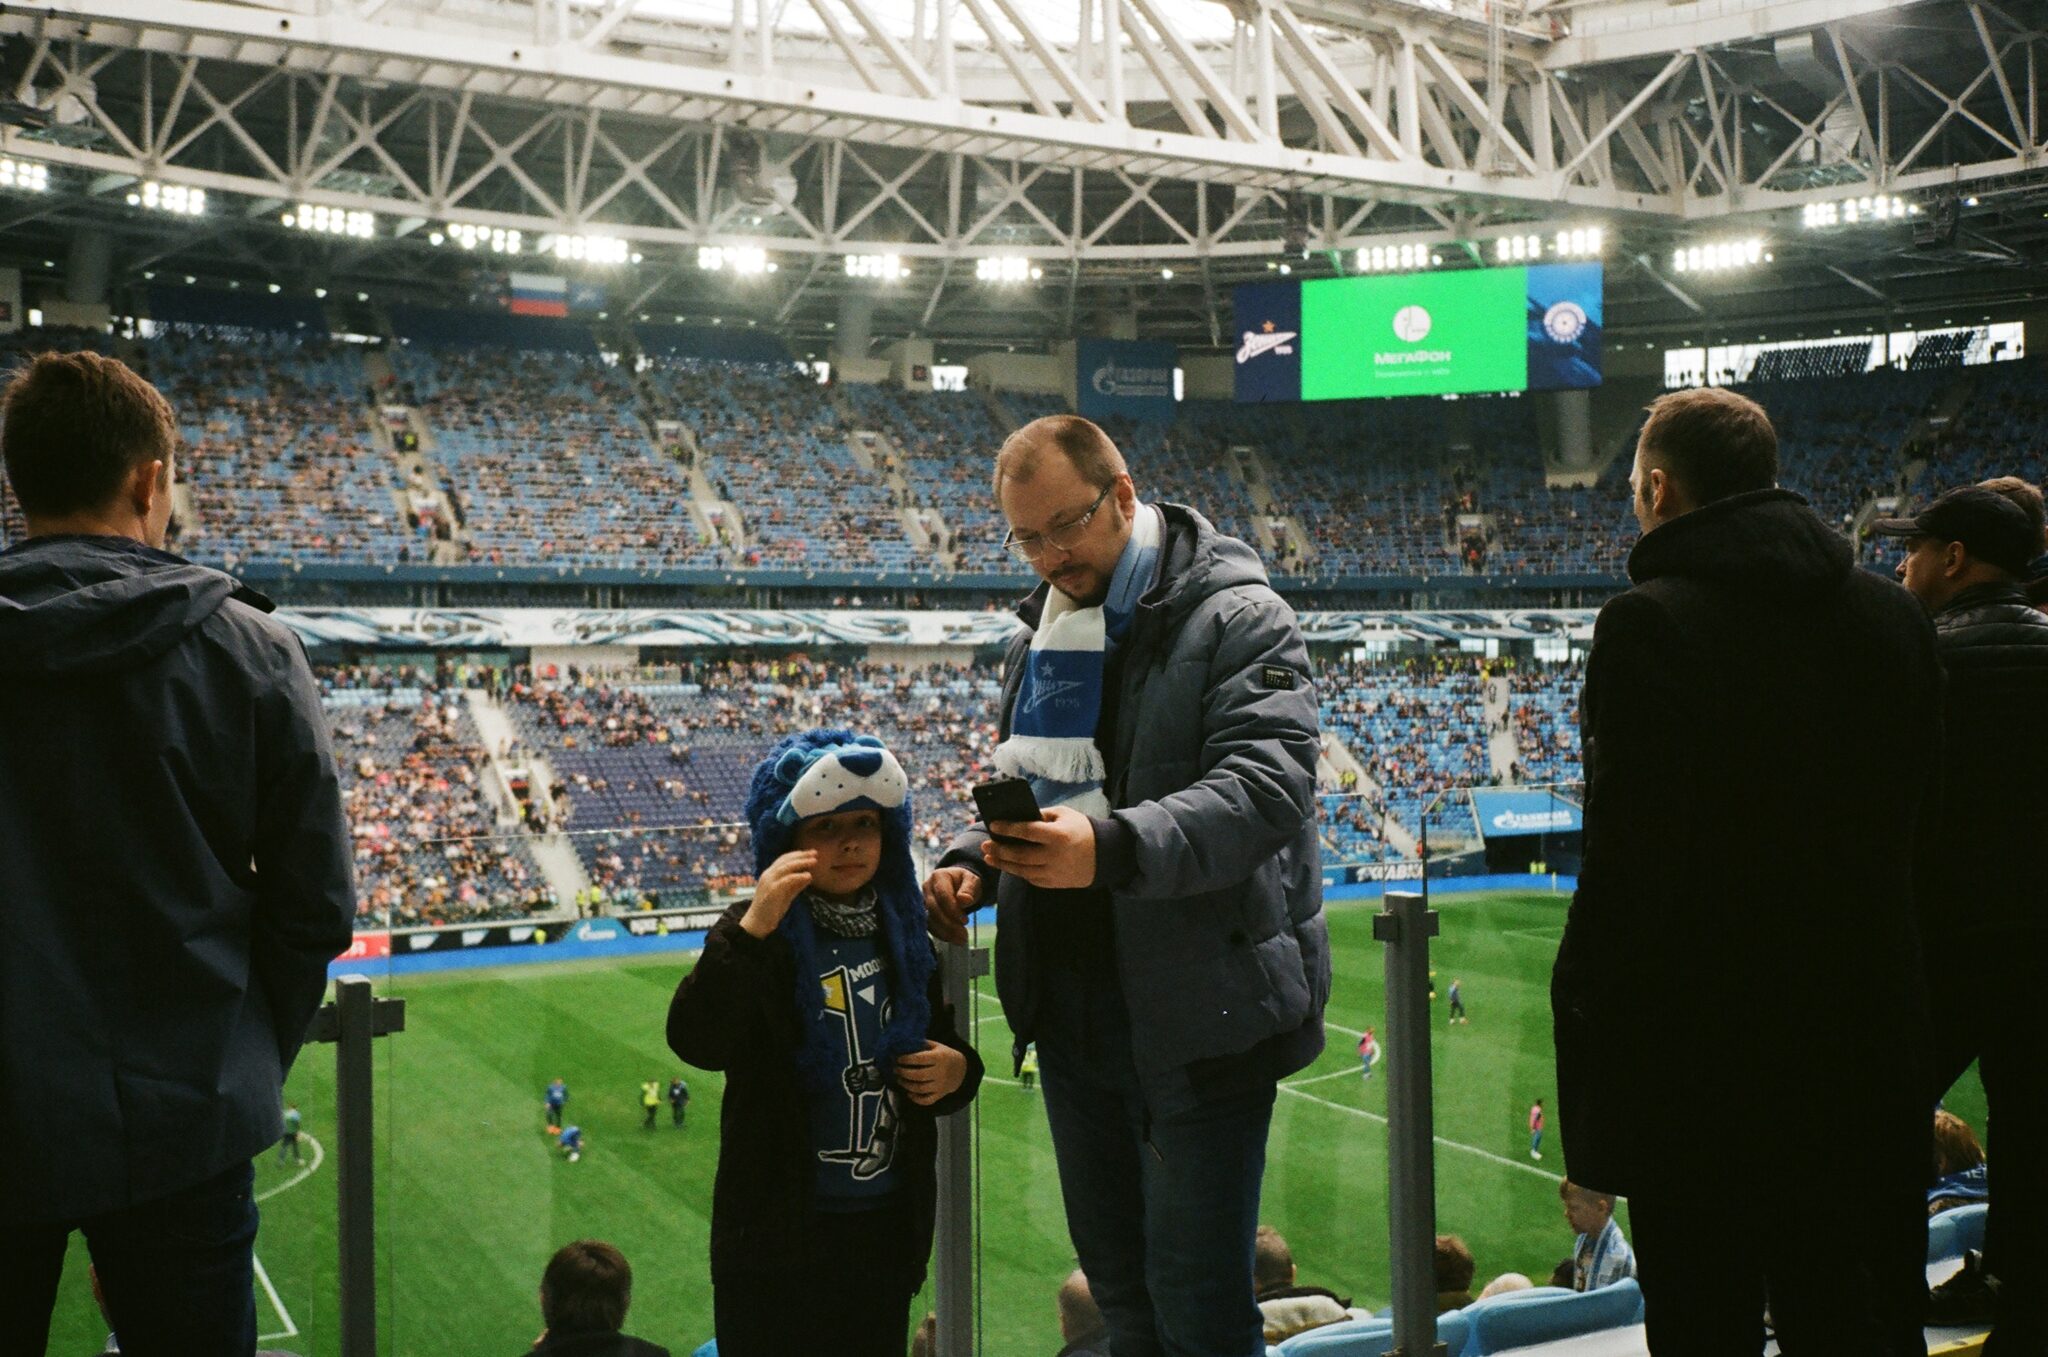 A man and boy inside a stadium